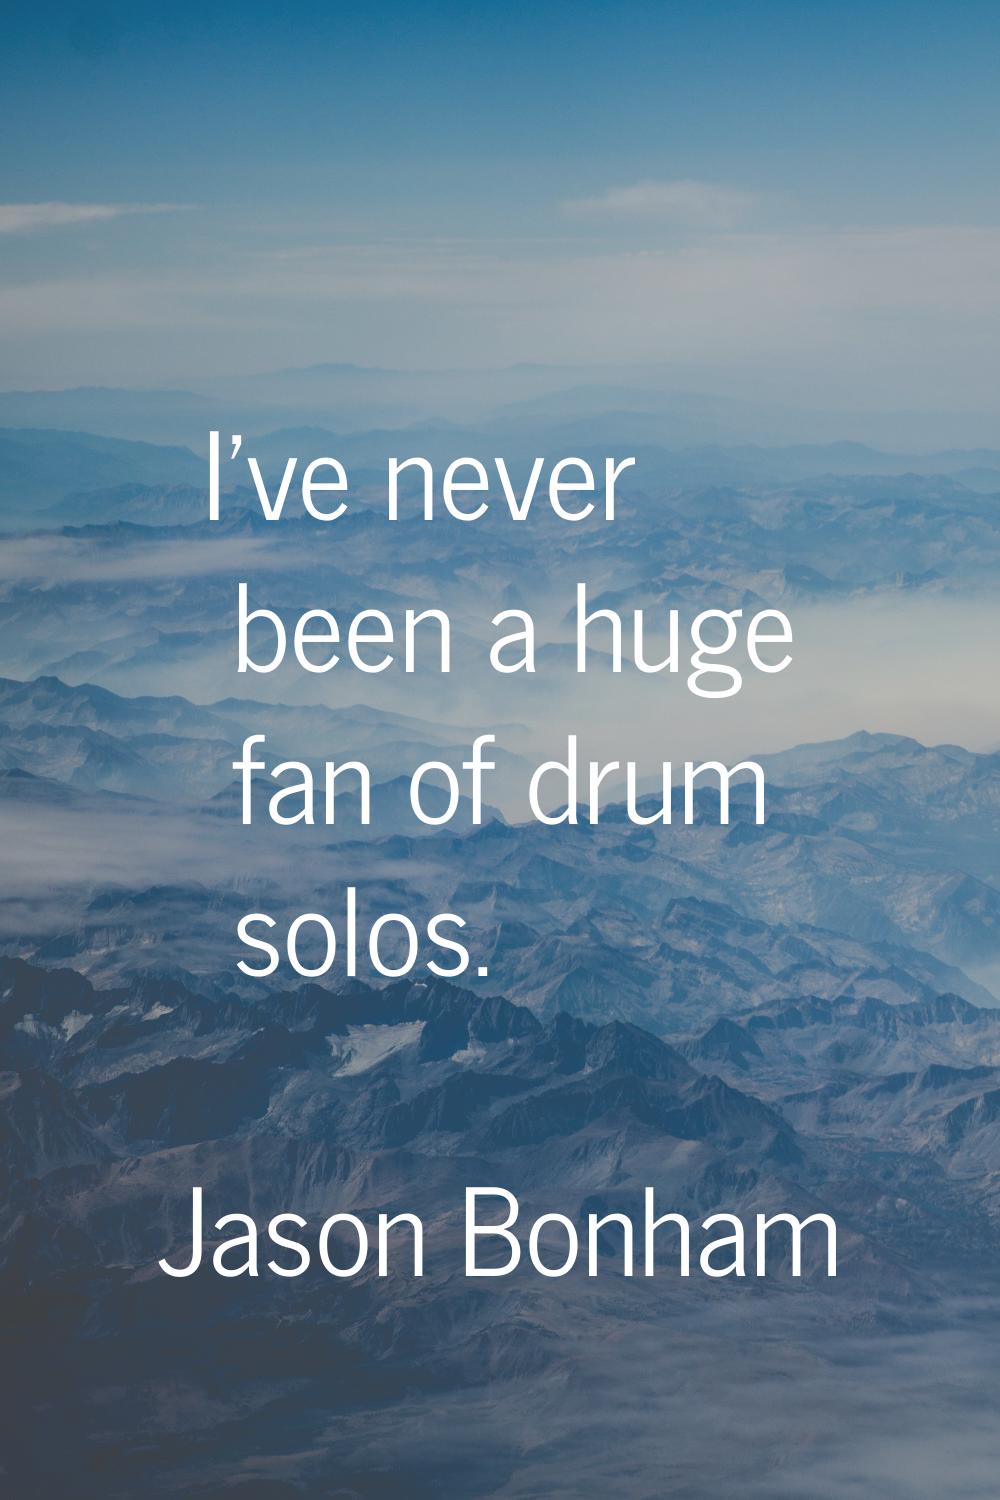 I've never been a huge fan of drum solos.